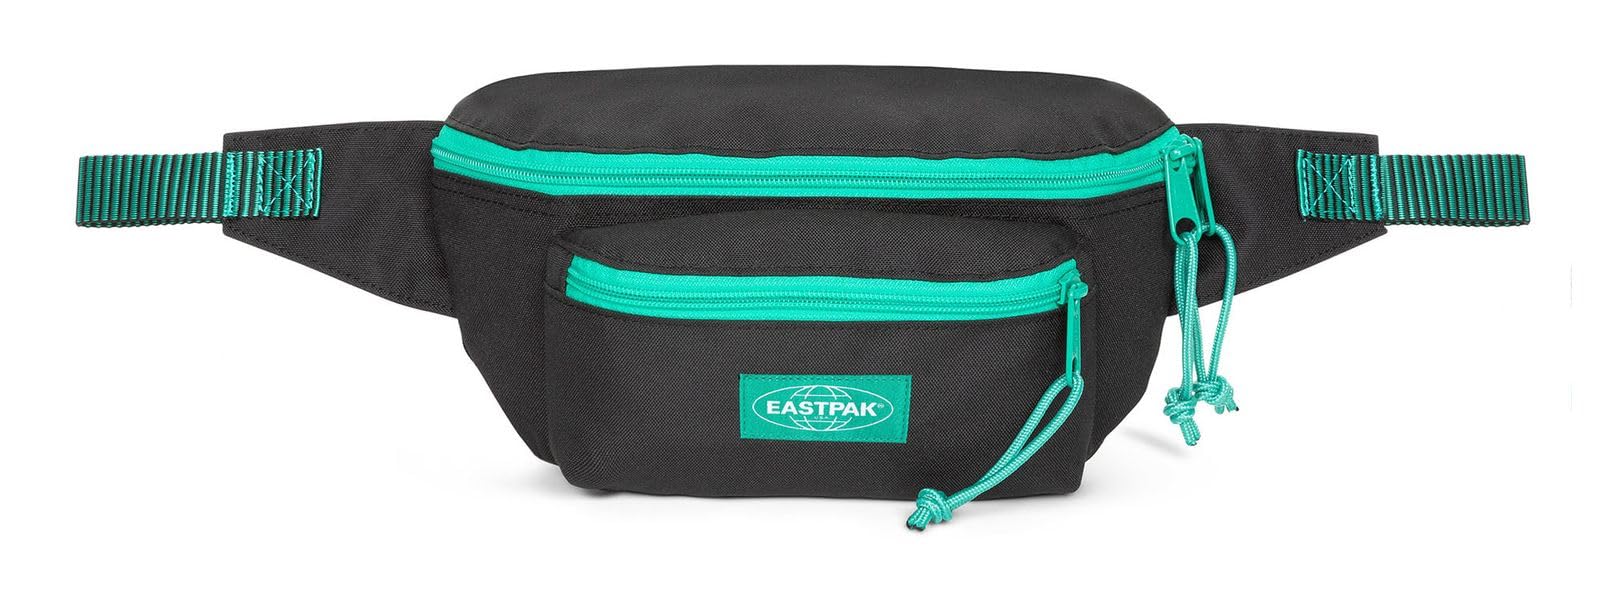 EASTPAK - DOGGY BAG - Gürteltasche, 3 L, Kontrast Stripe Black (Schwarz)